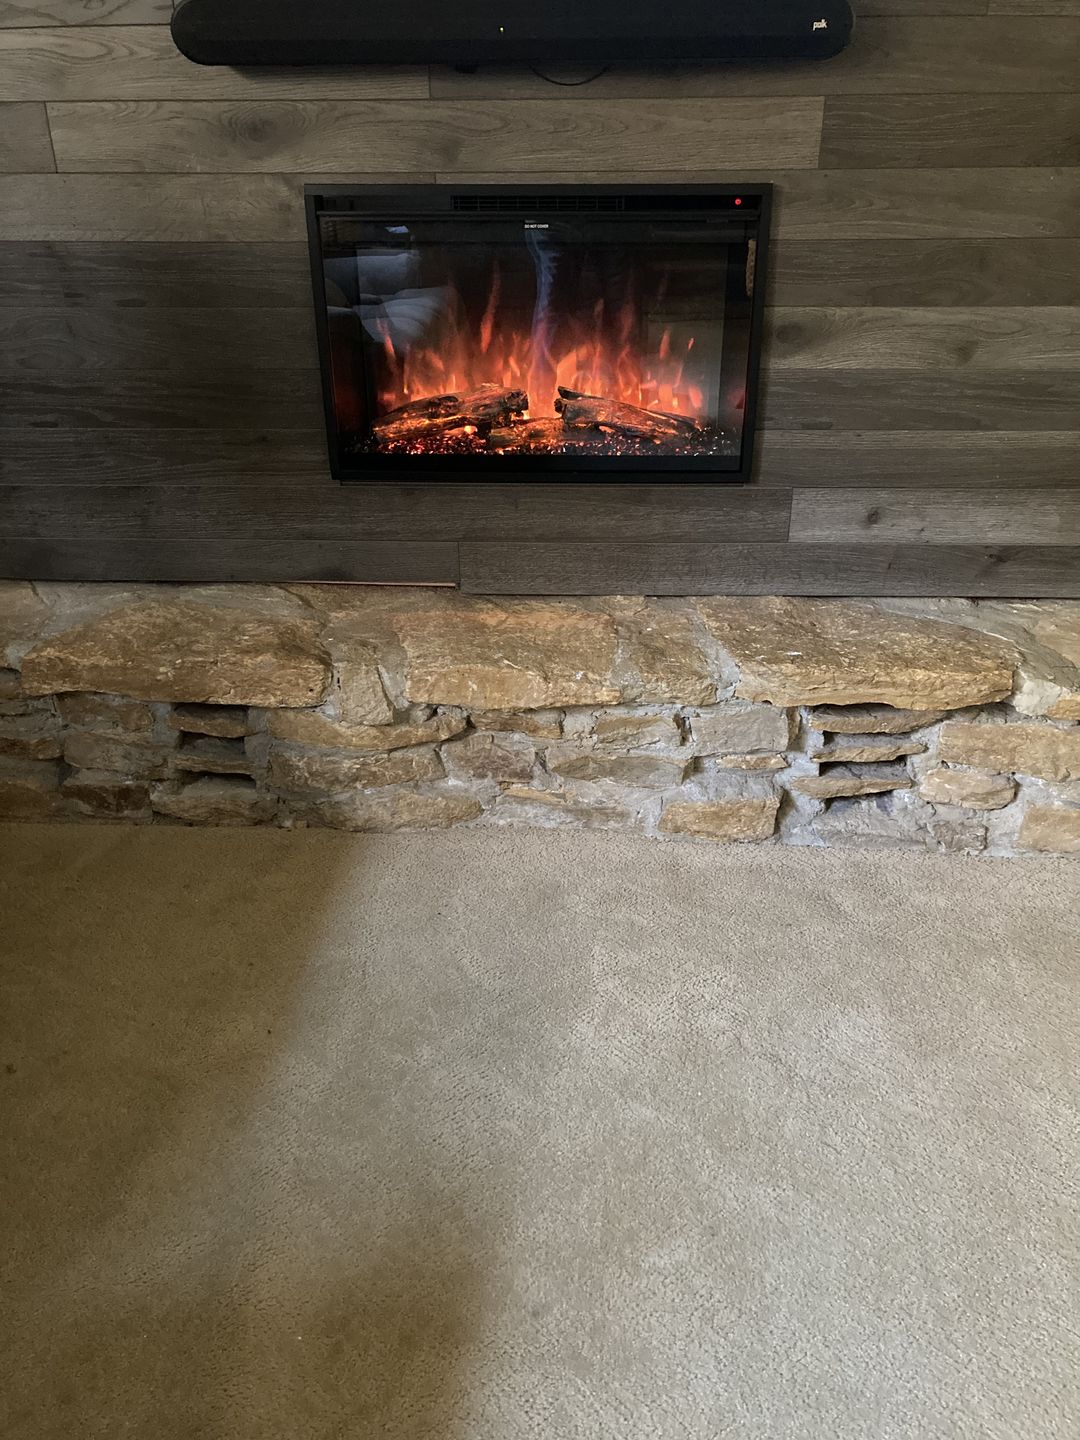 Modern Flames Redstone 36 inch Built-In Electric Fireplace Firebox Insert